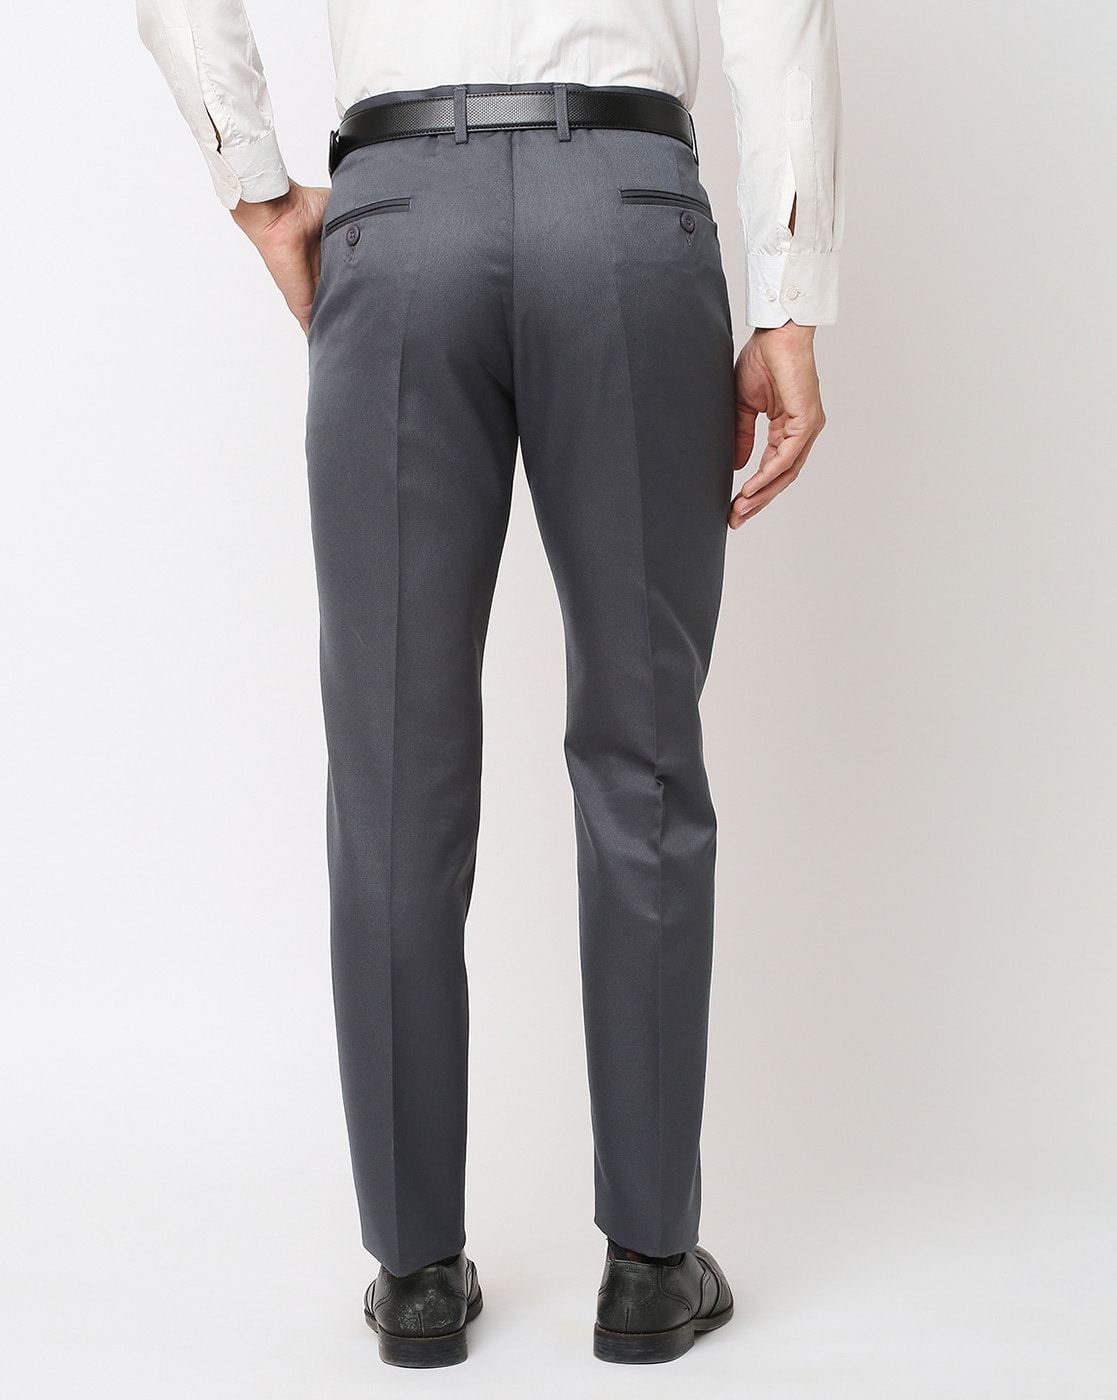 HolloMen: Dapper Elegance with Gray Slim Fit Trousers | Grey slim fit  trousers, Slim fit trousers, Slim fit chino pants